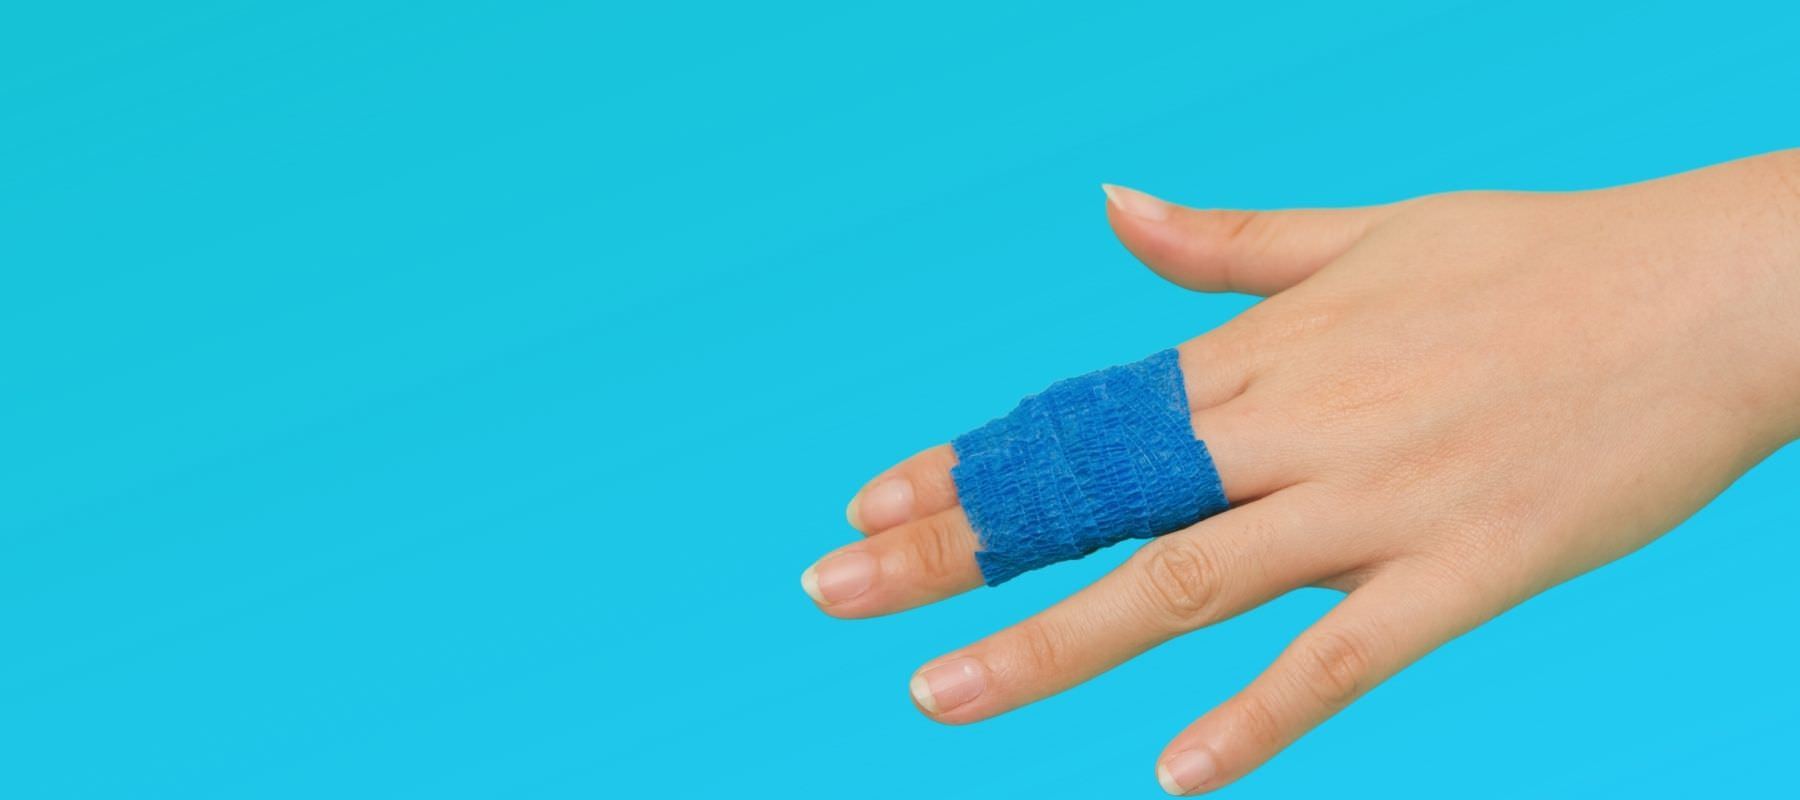 Oval 8 Finger Splints For Finger Injuries, Fractures -Tynor Australia